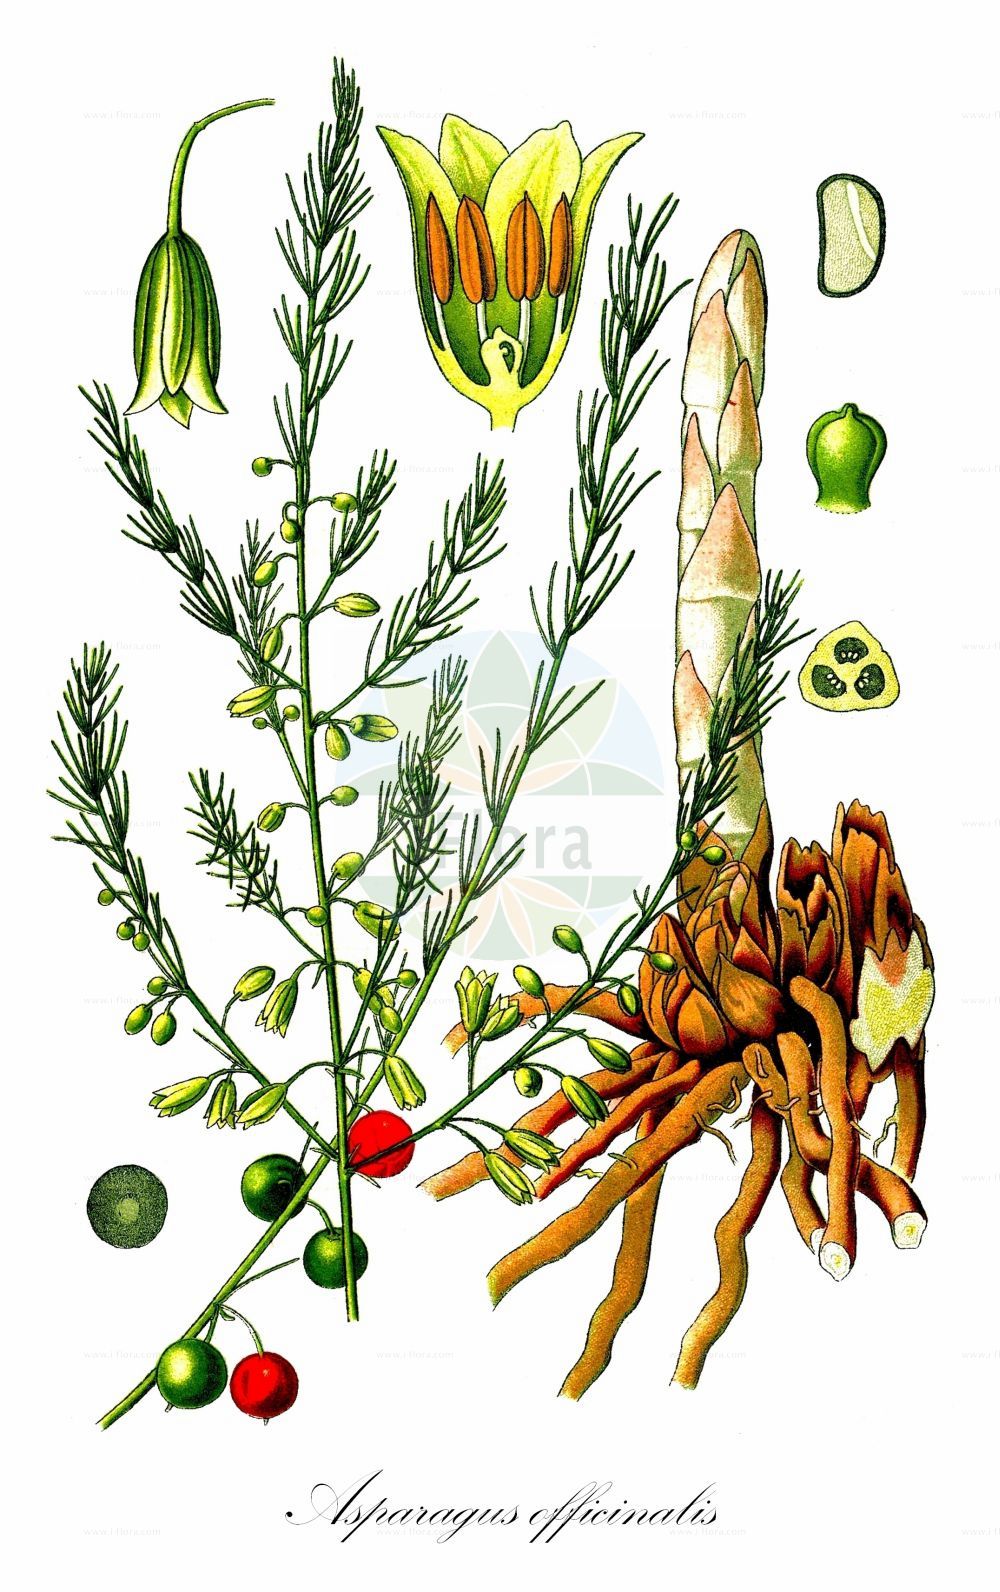 Historische Abbildung von Asparagus officinalis (Gemüse-Spargel - Garden Asparagus). ---- Historical Drawing of Asparagus officinalis (Gemüse-Spargel - Garden Asparagus).(Asparagus officinalis,Gemüse-Spargel,Garden Asparagus,Asparagus officinalis,Gemuese-Spargel,Garden Asparagus,Wild Asparagus,Asparagus,Spargel,Asparagus,Asparagaceae,Spargelgewächse,Asparagus family,Thomé (1885))